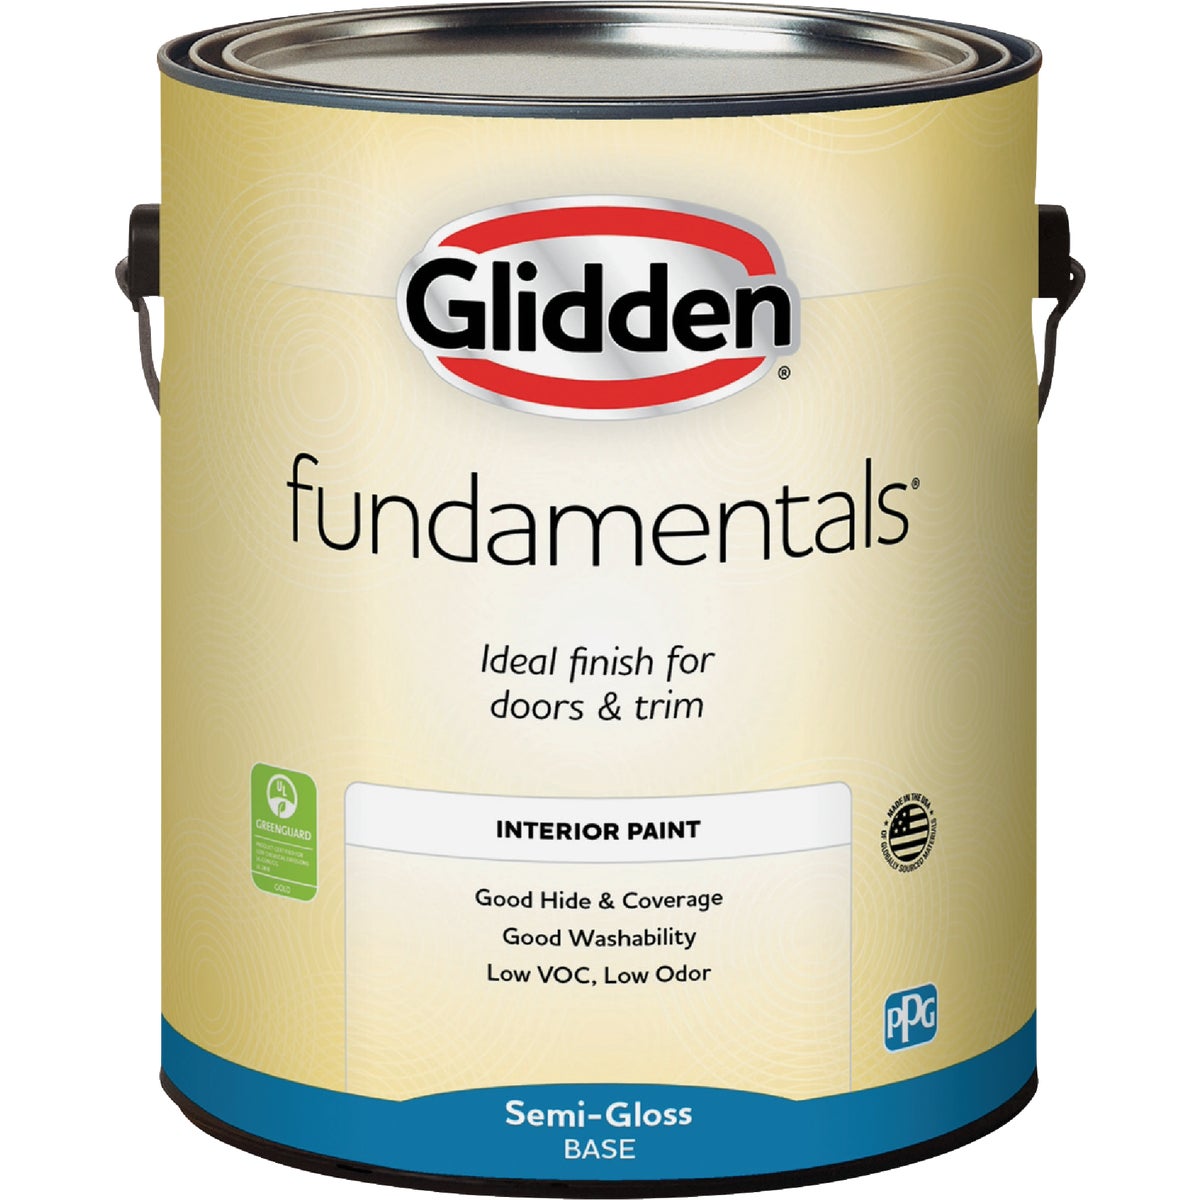 Glidden Fundamentals Interior Paint SemiGloss Midtone